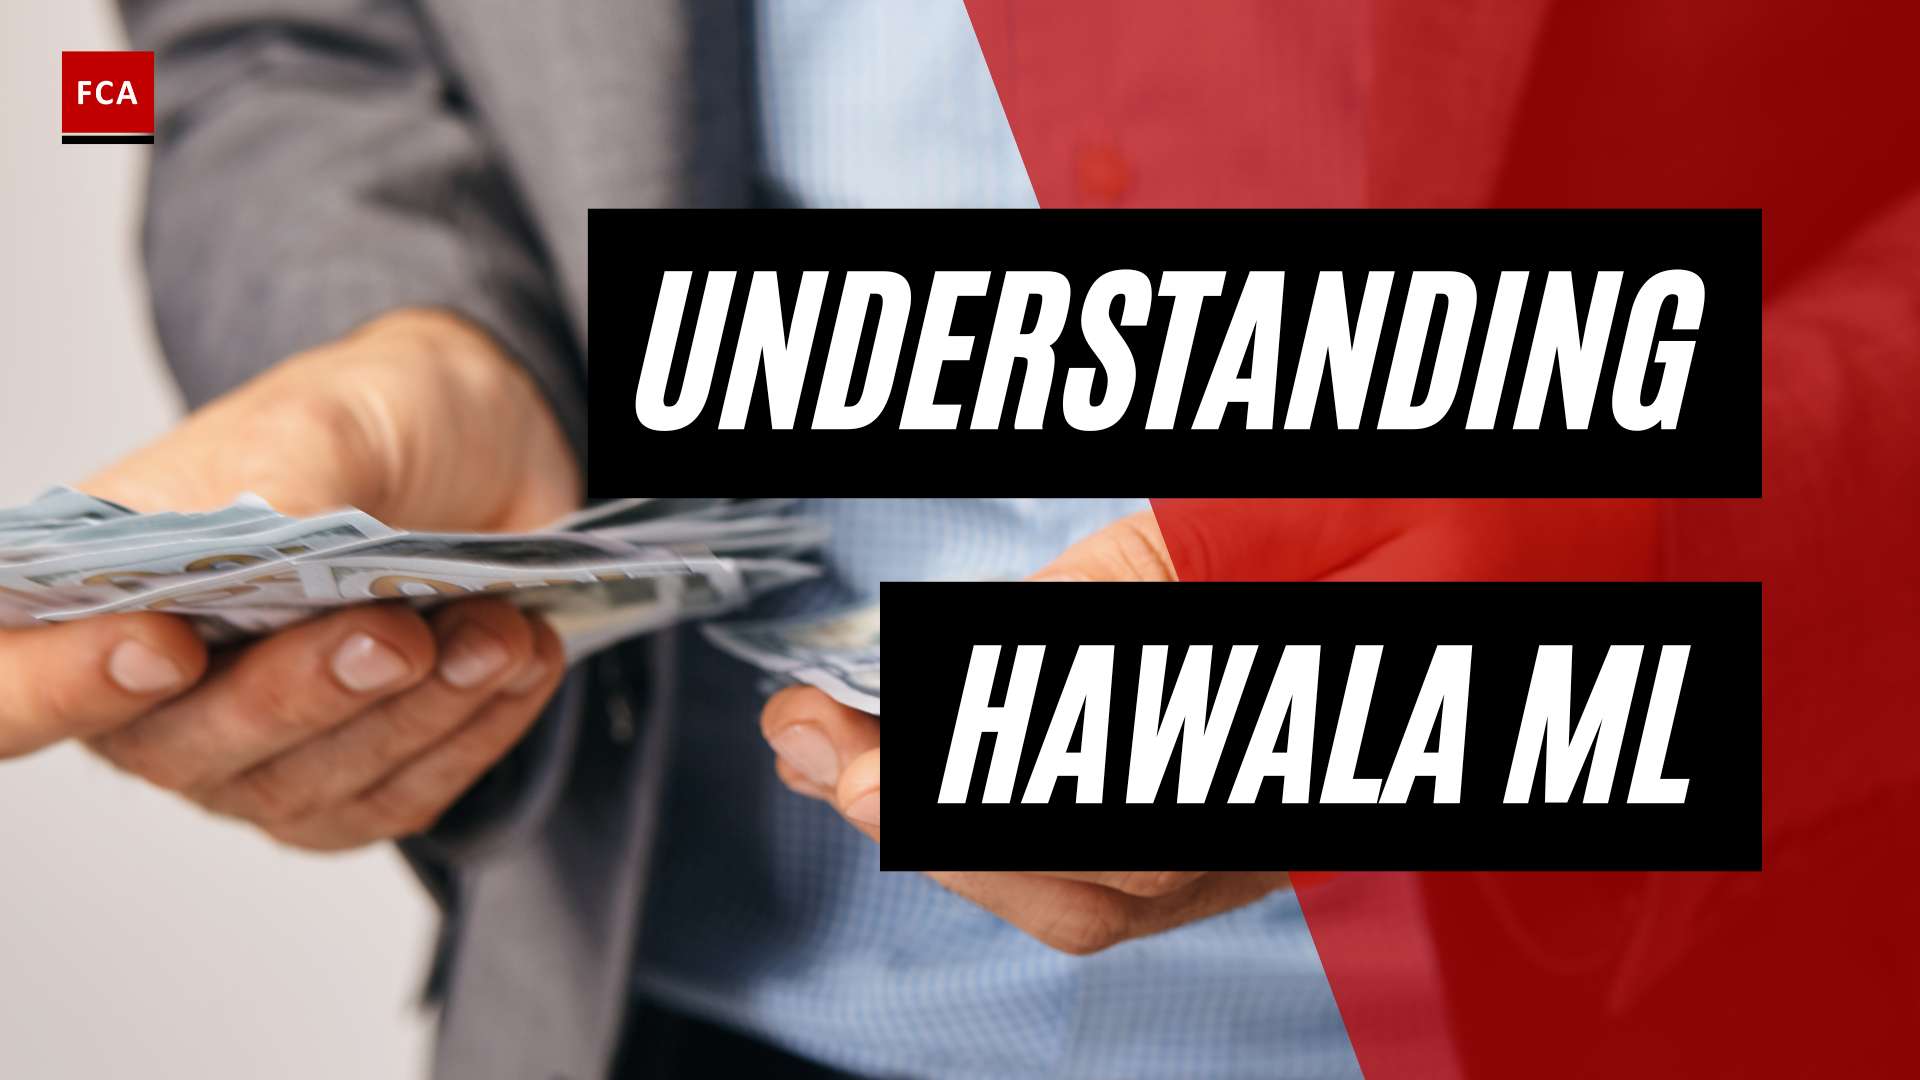 Battle Against Hidden Transactions: Understanding Hawala Money Laundering